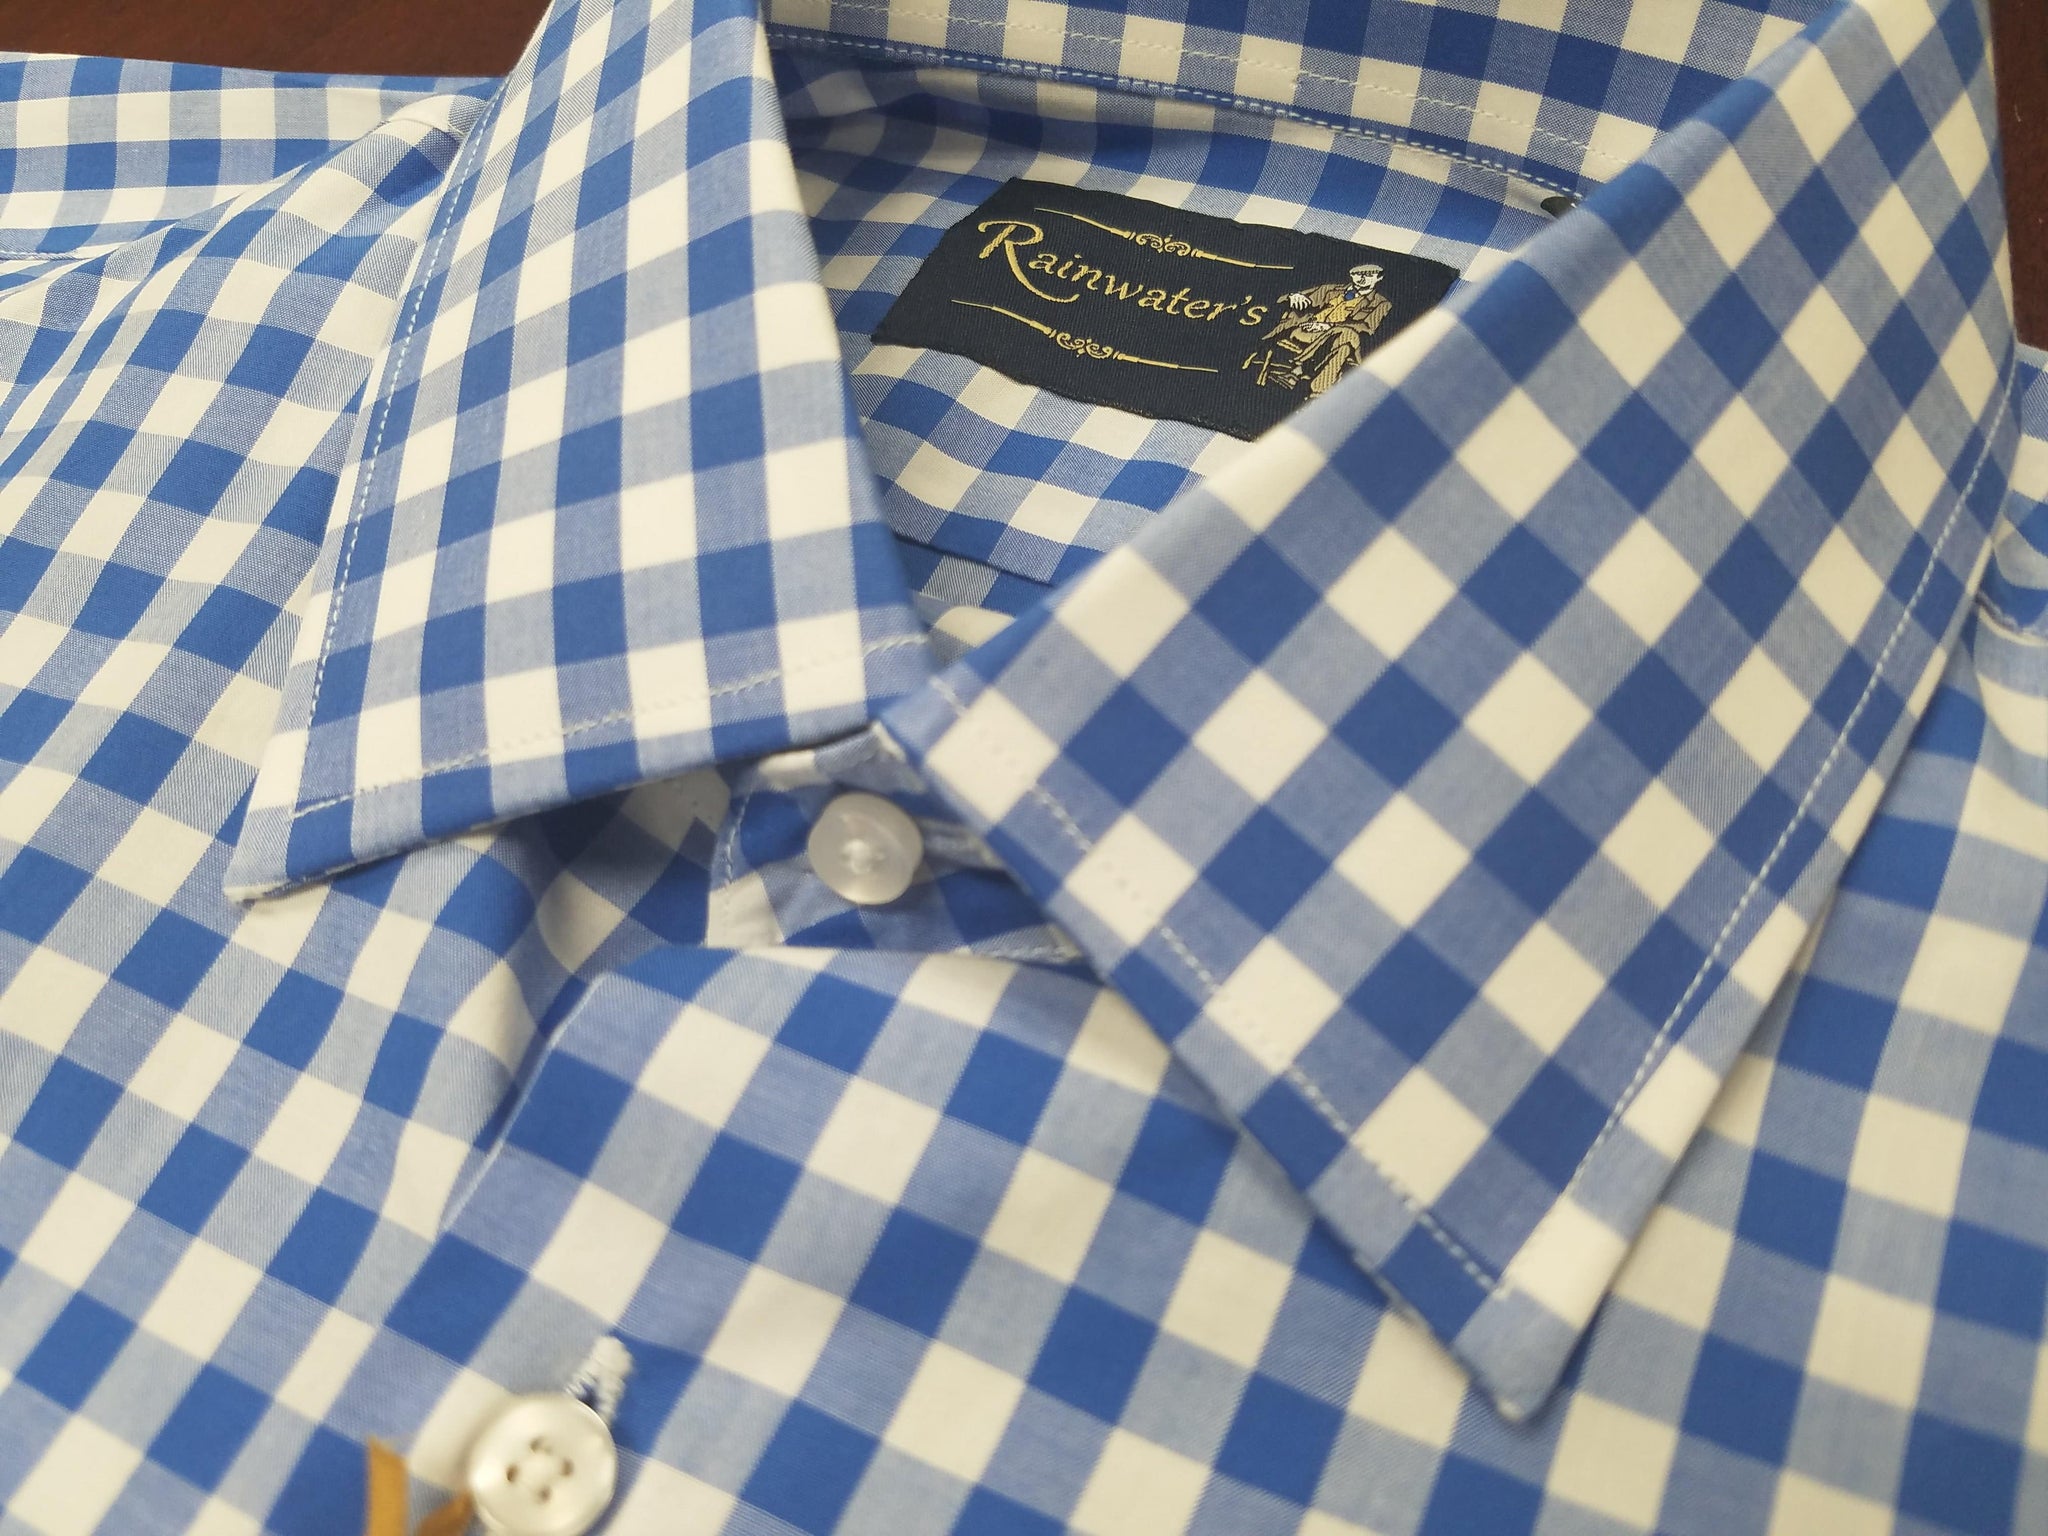 Rainwater's 100% Cotton Mitered Cuff Blue Gingham Dress Shirt - Rainwater's Men's Clothing and Tuxedo Rental